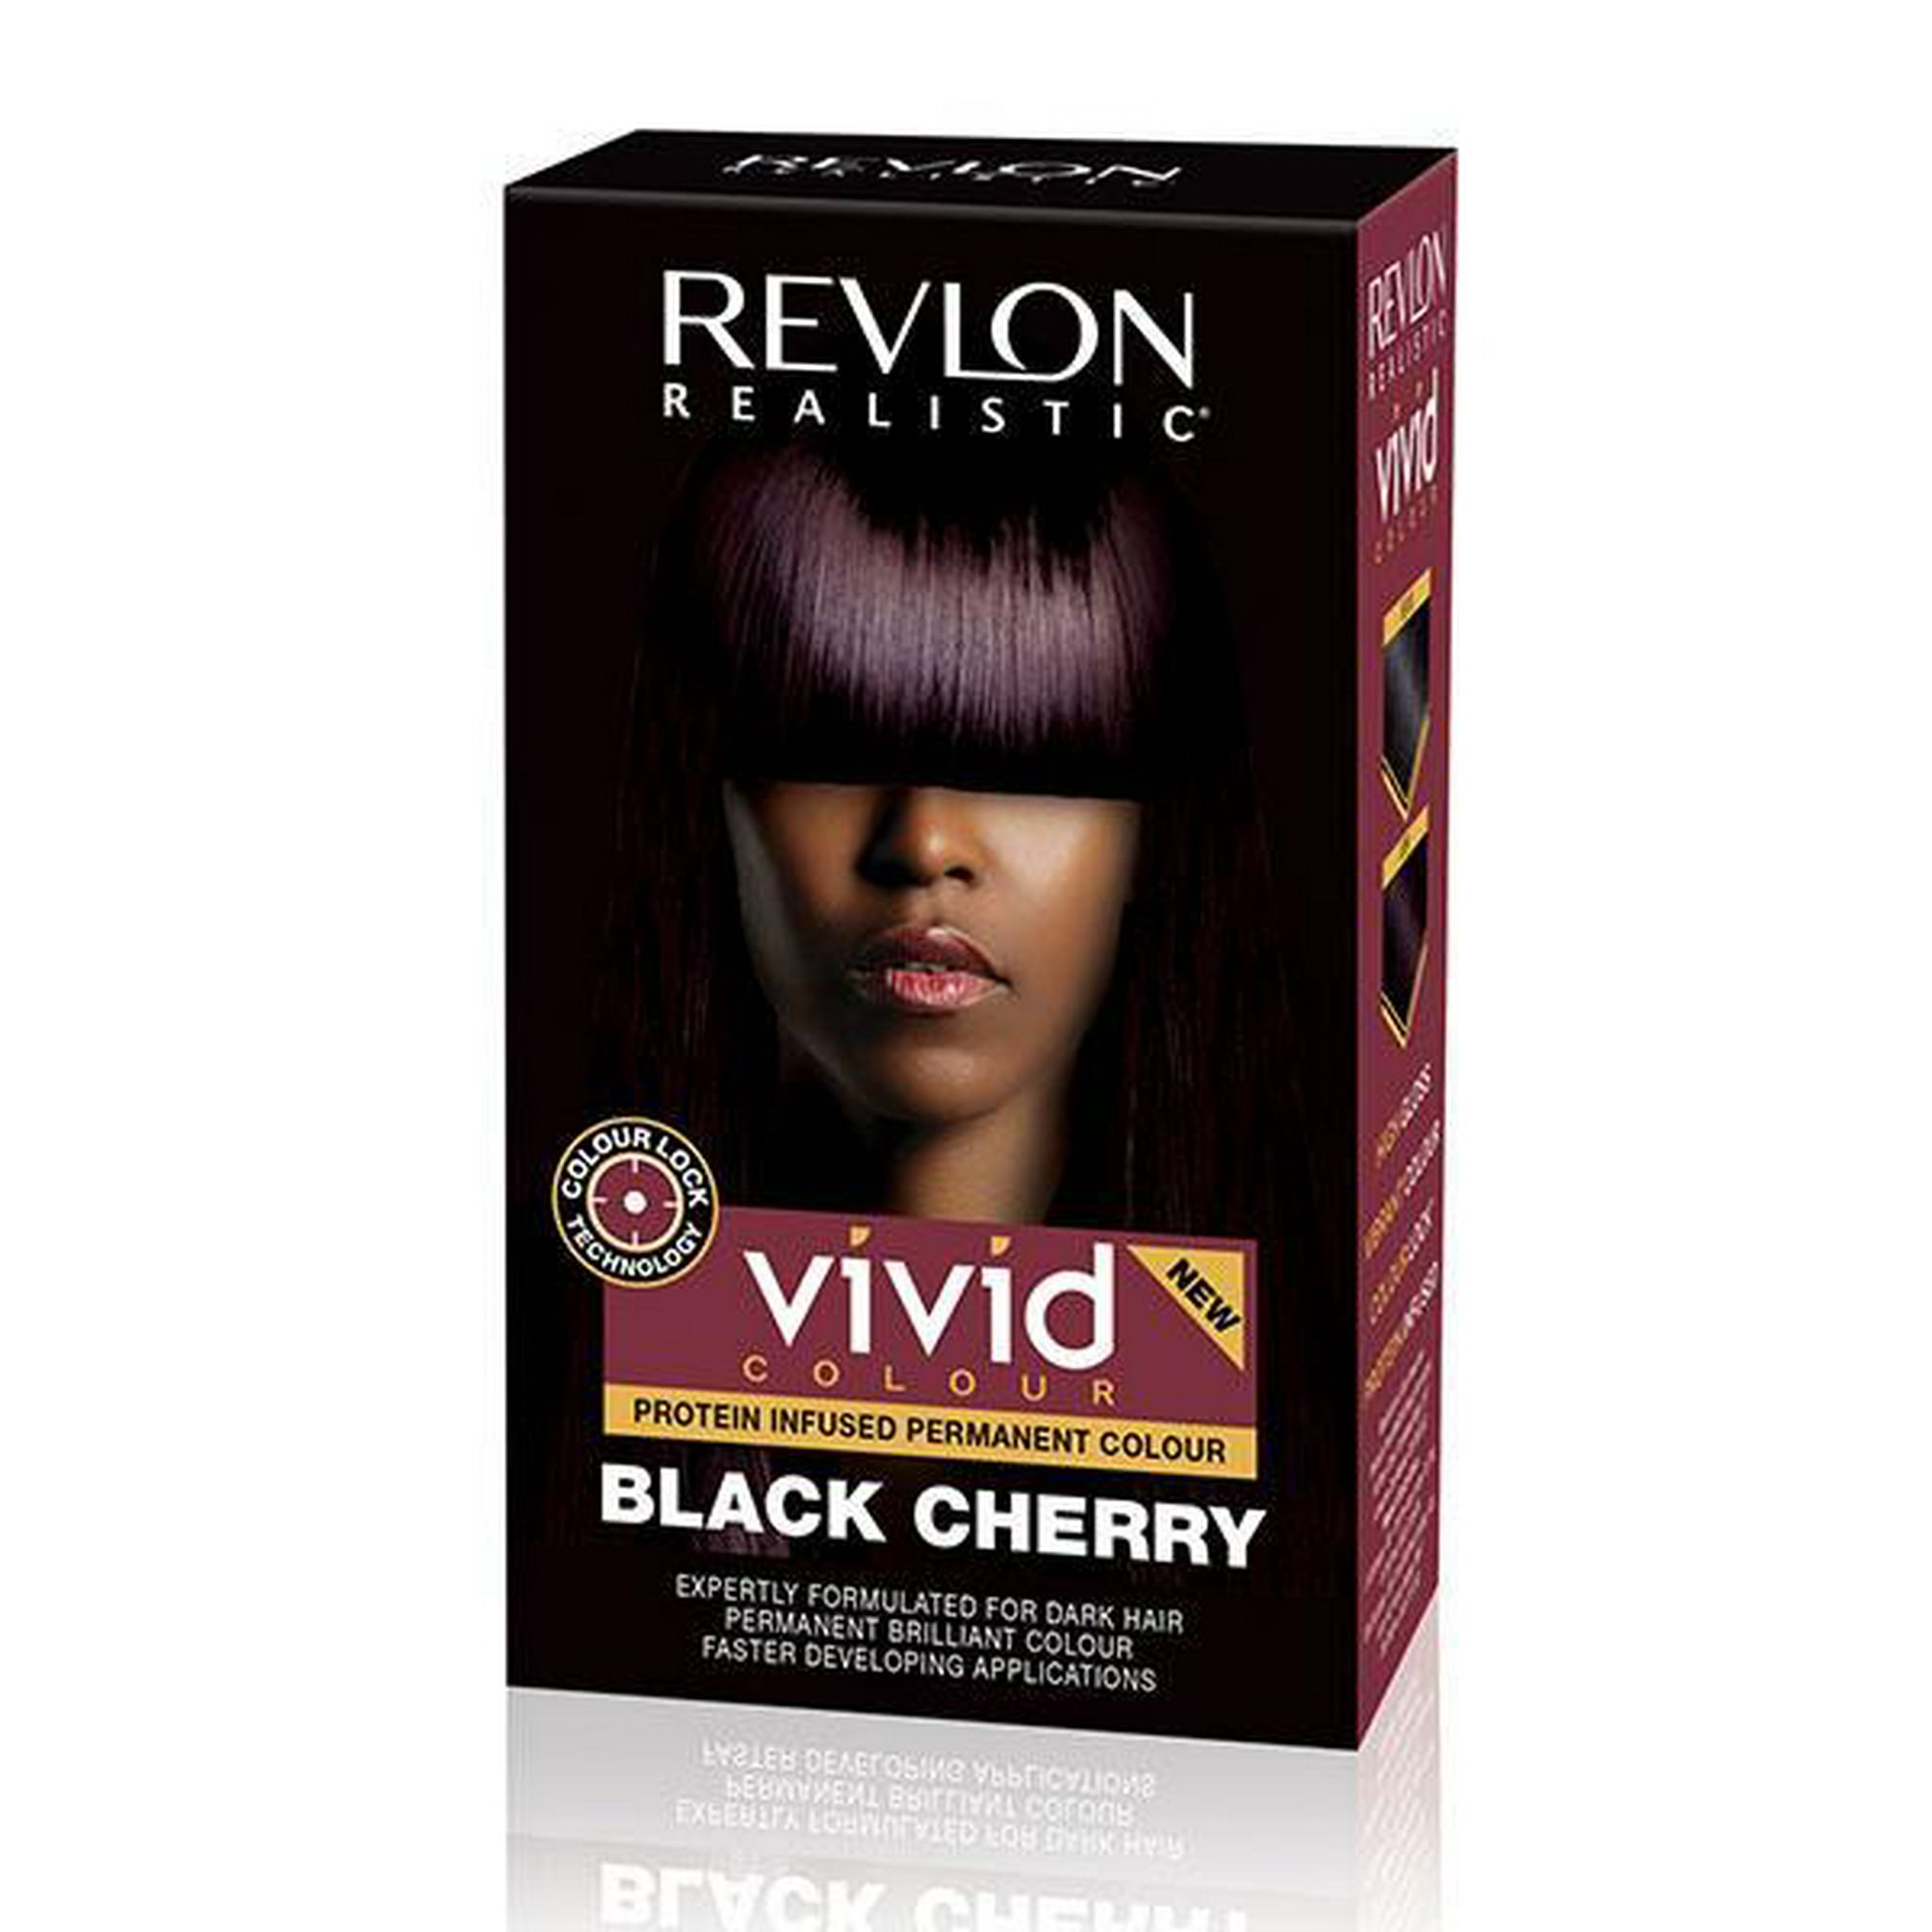 Revlon Realistic Vivid Hair Colour - Black Cherry | Walmart Canada